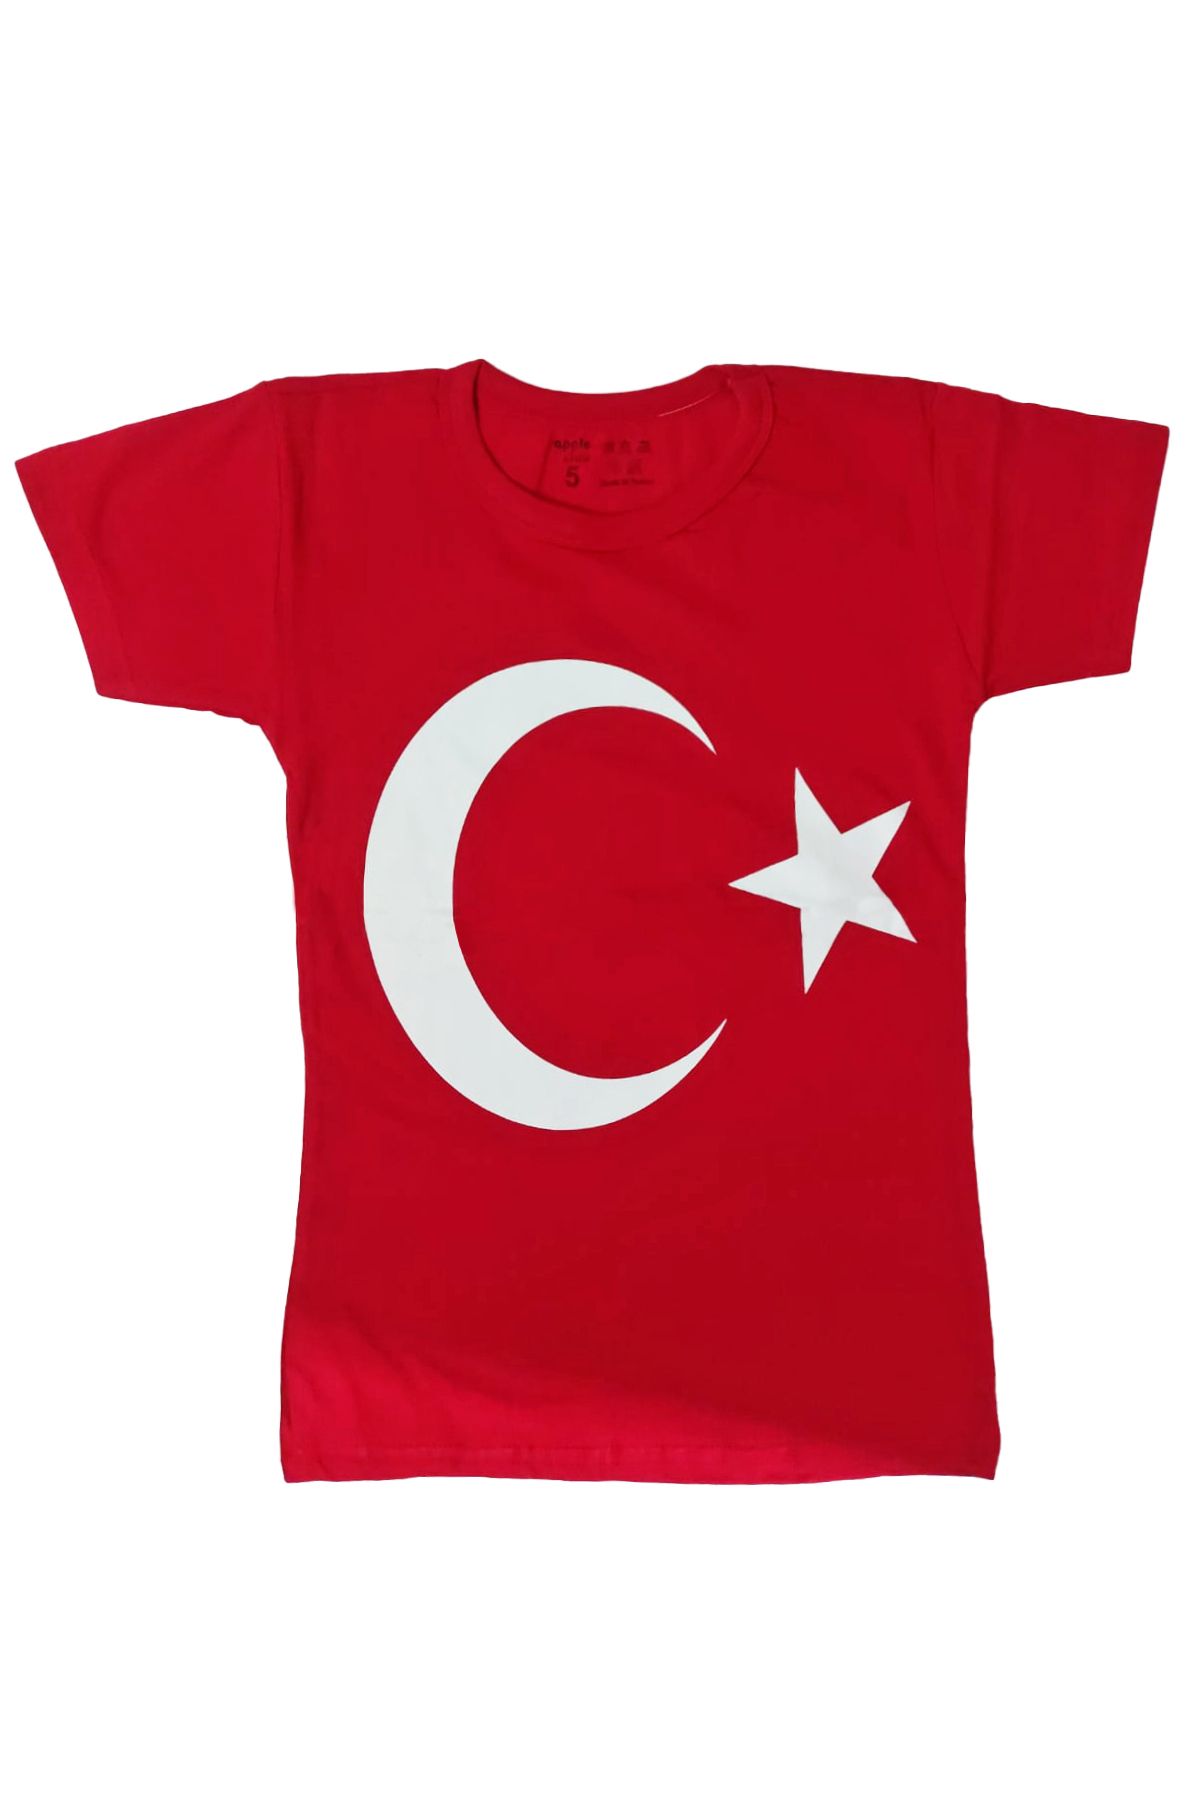 Limmy Türk Bayraklı Tişört Pamuklu Kırmızı Ay Yıldız Çocuk Tshirt- 8 Yaş